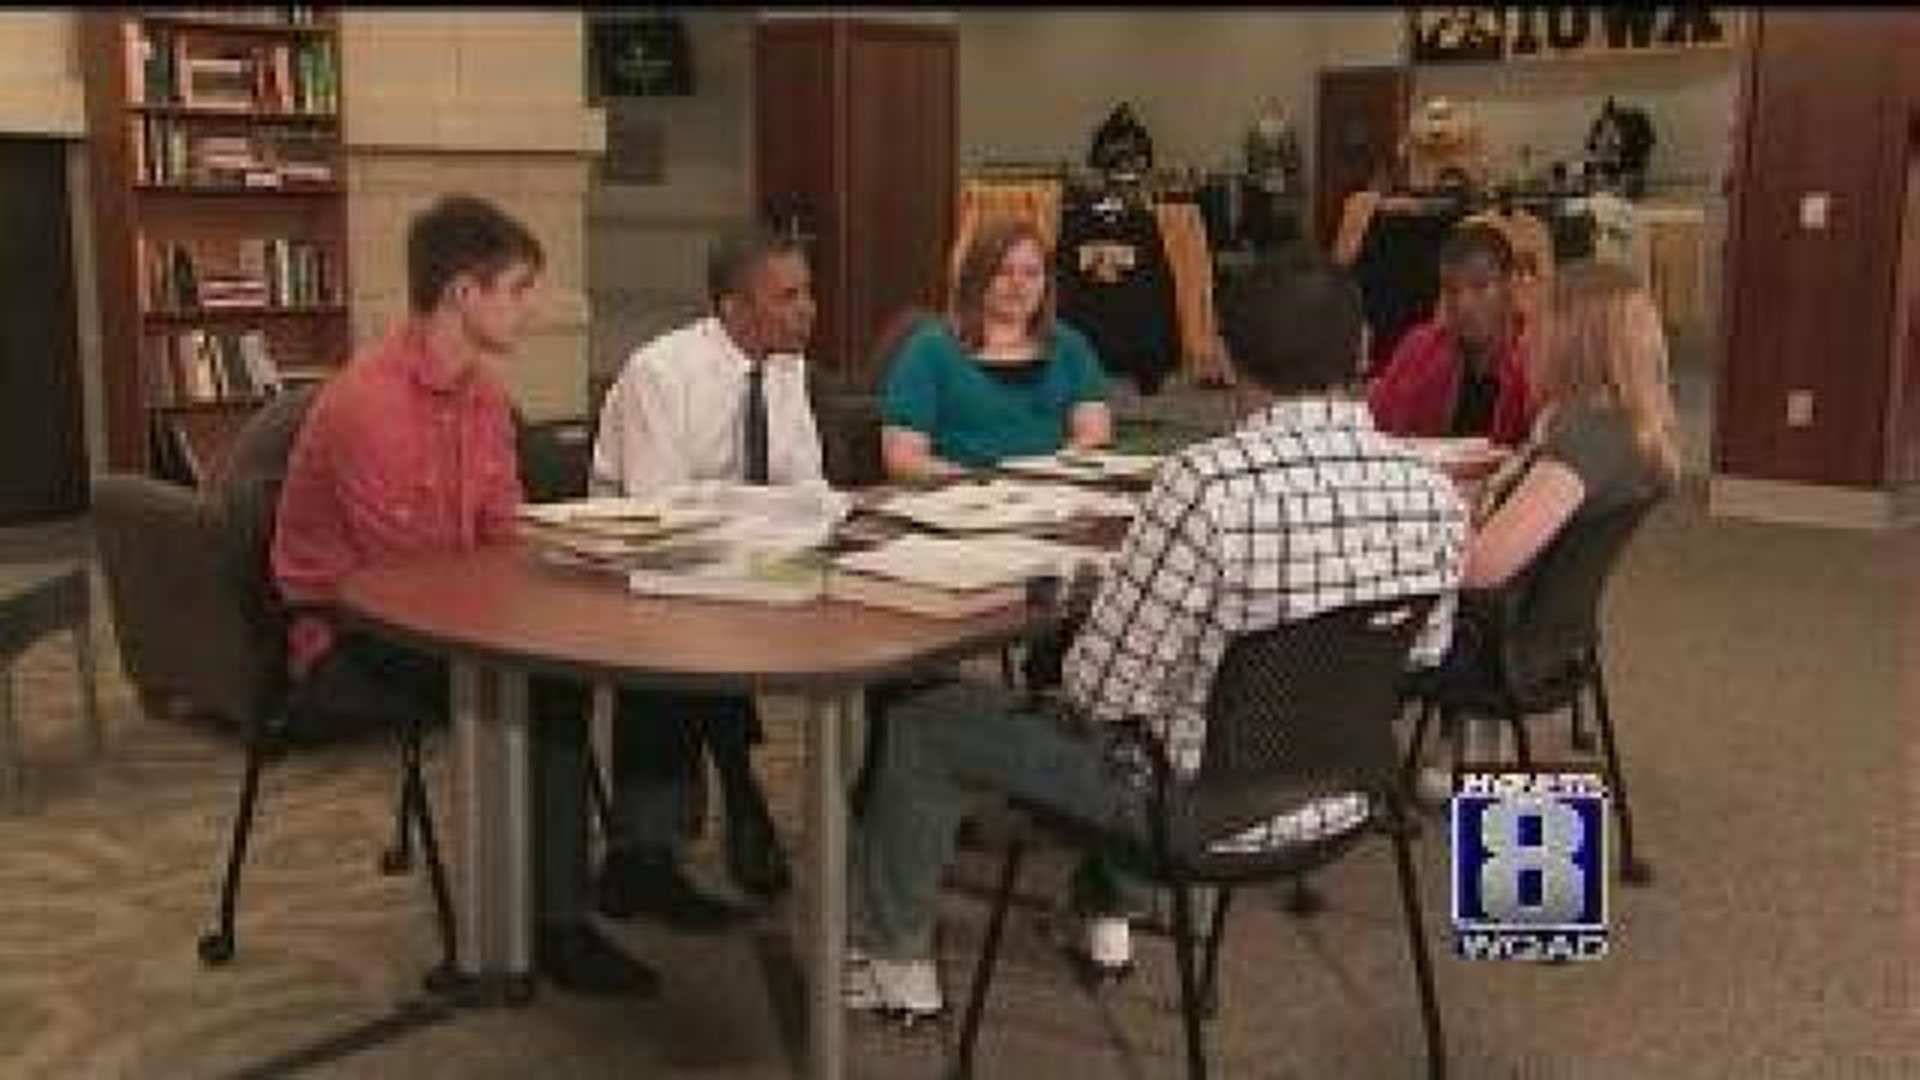 Obama talk education in Iowa City